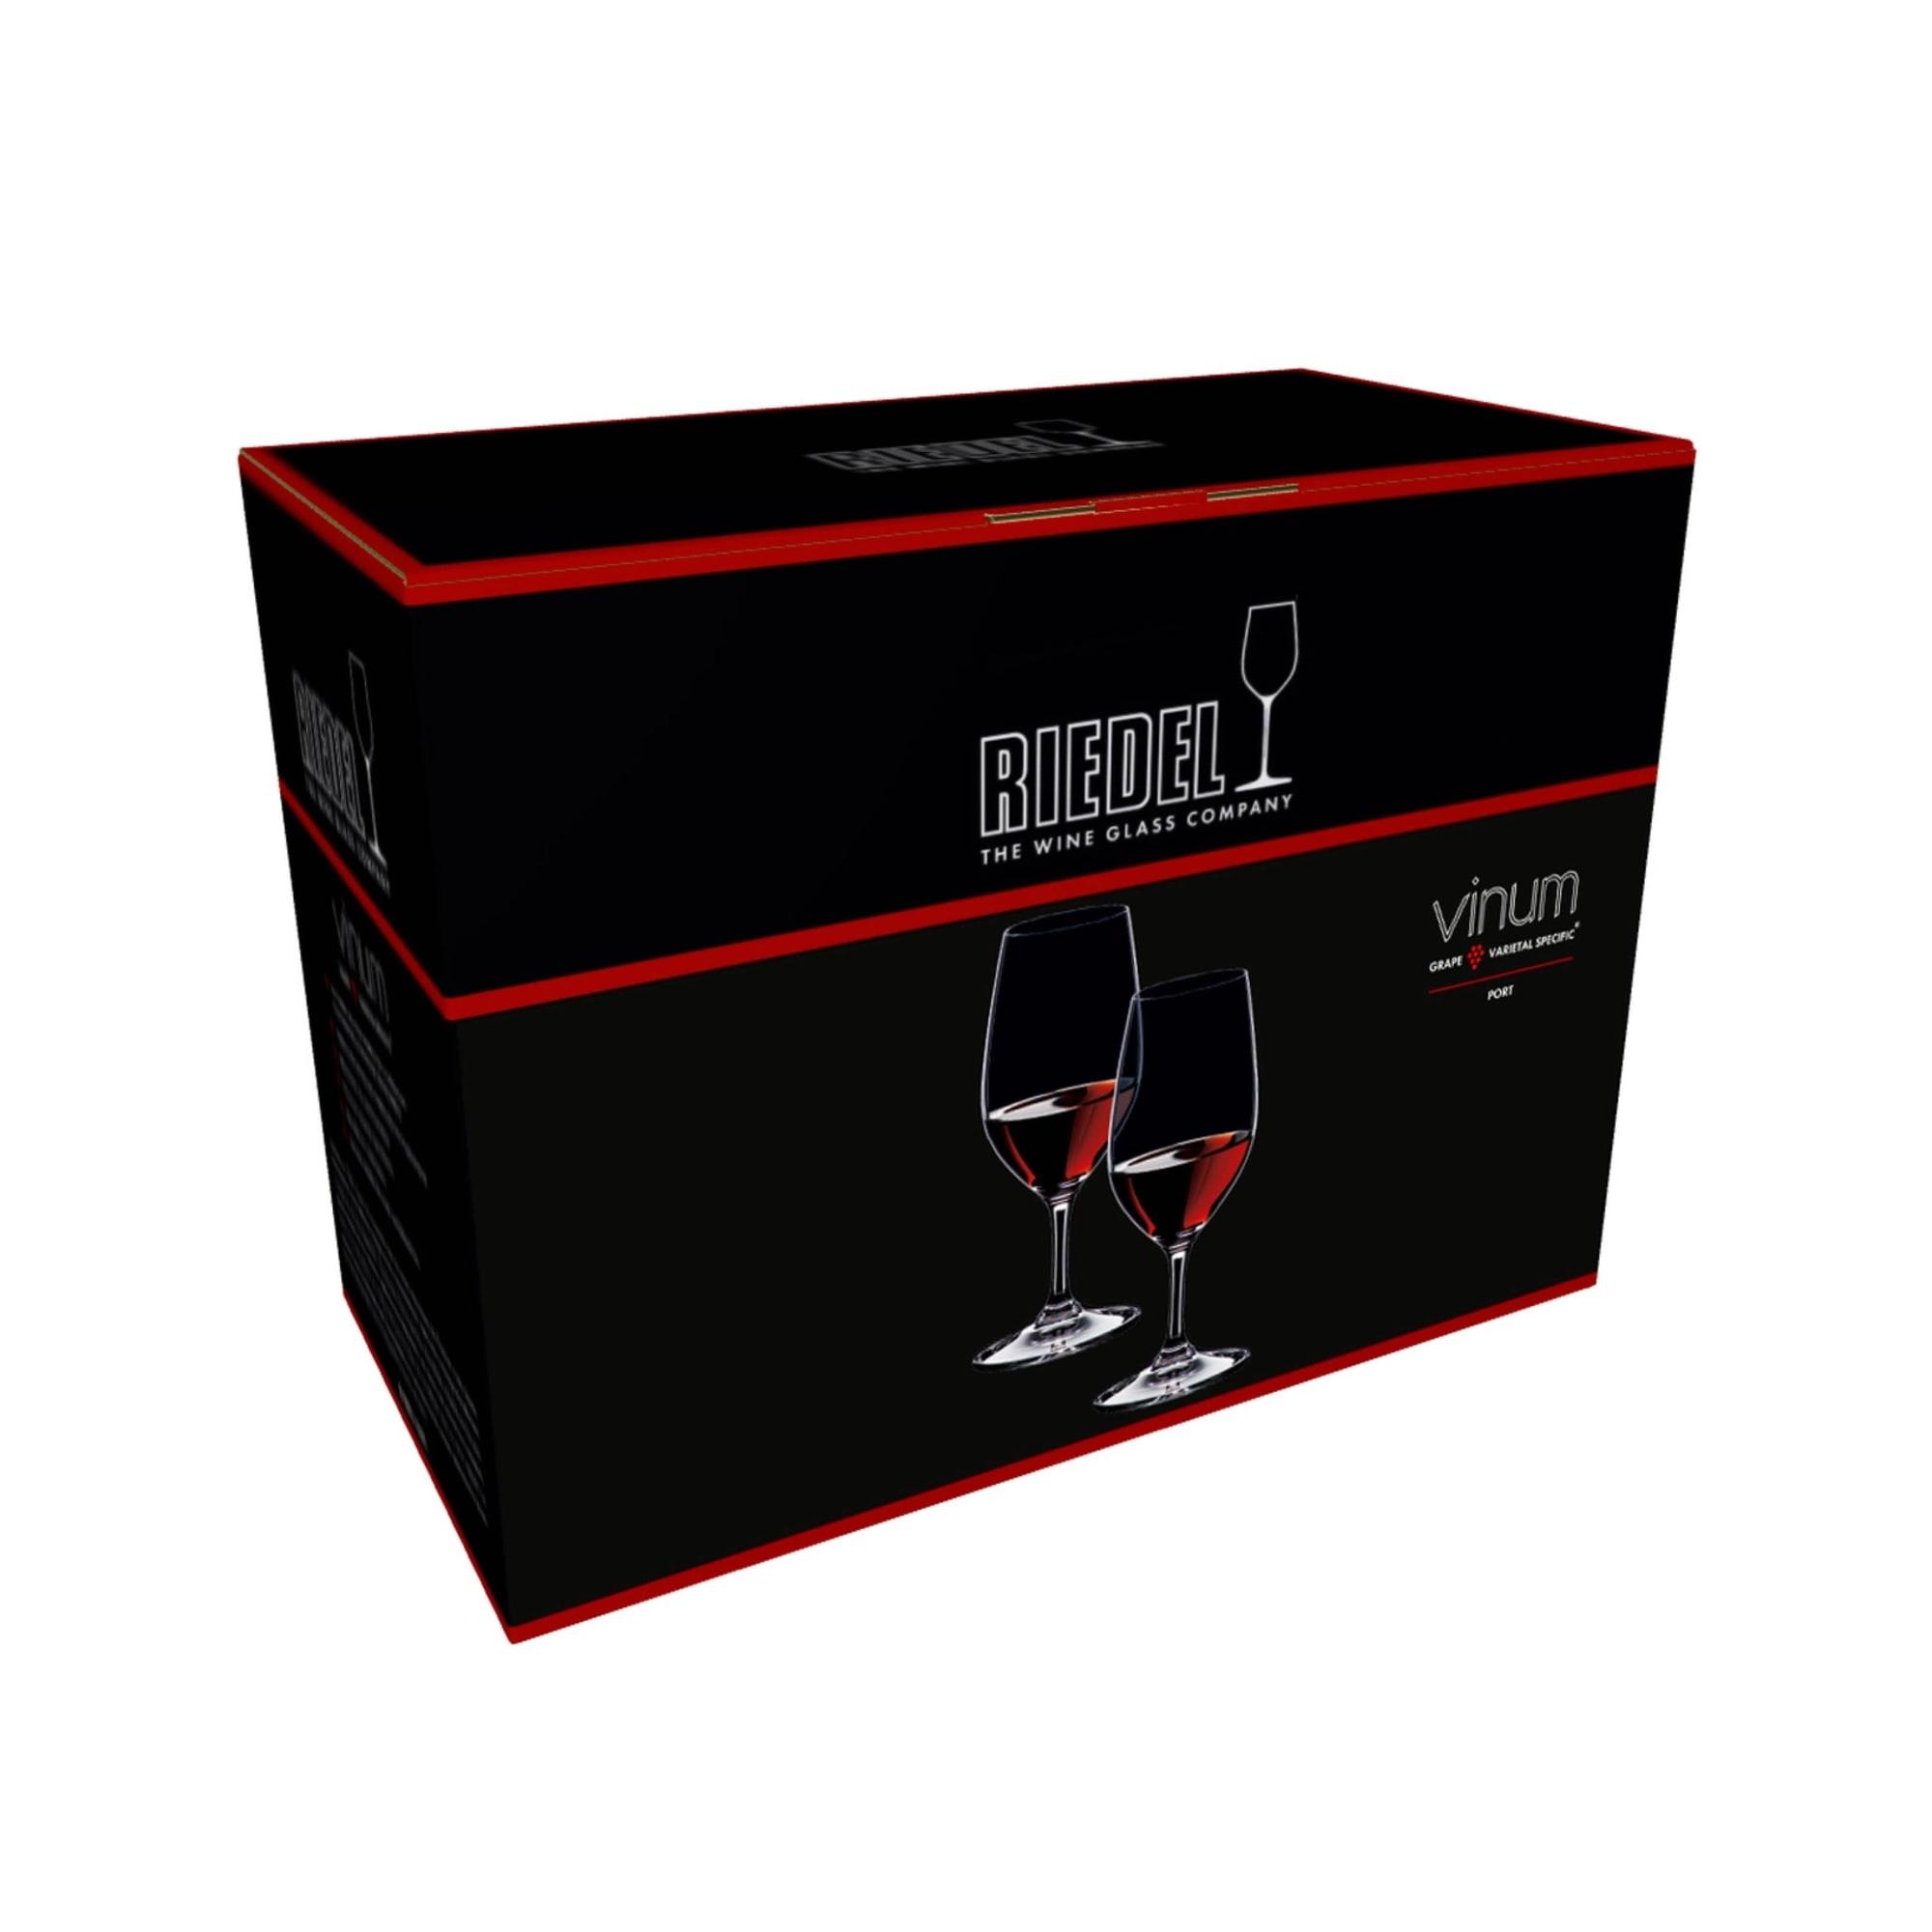 Riedel Vinum Port-Sherry Wine Glass 240ml Set of 2 Image 3